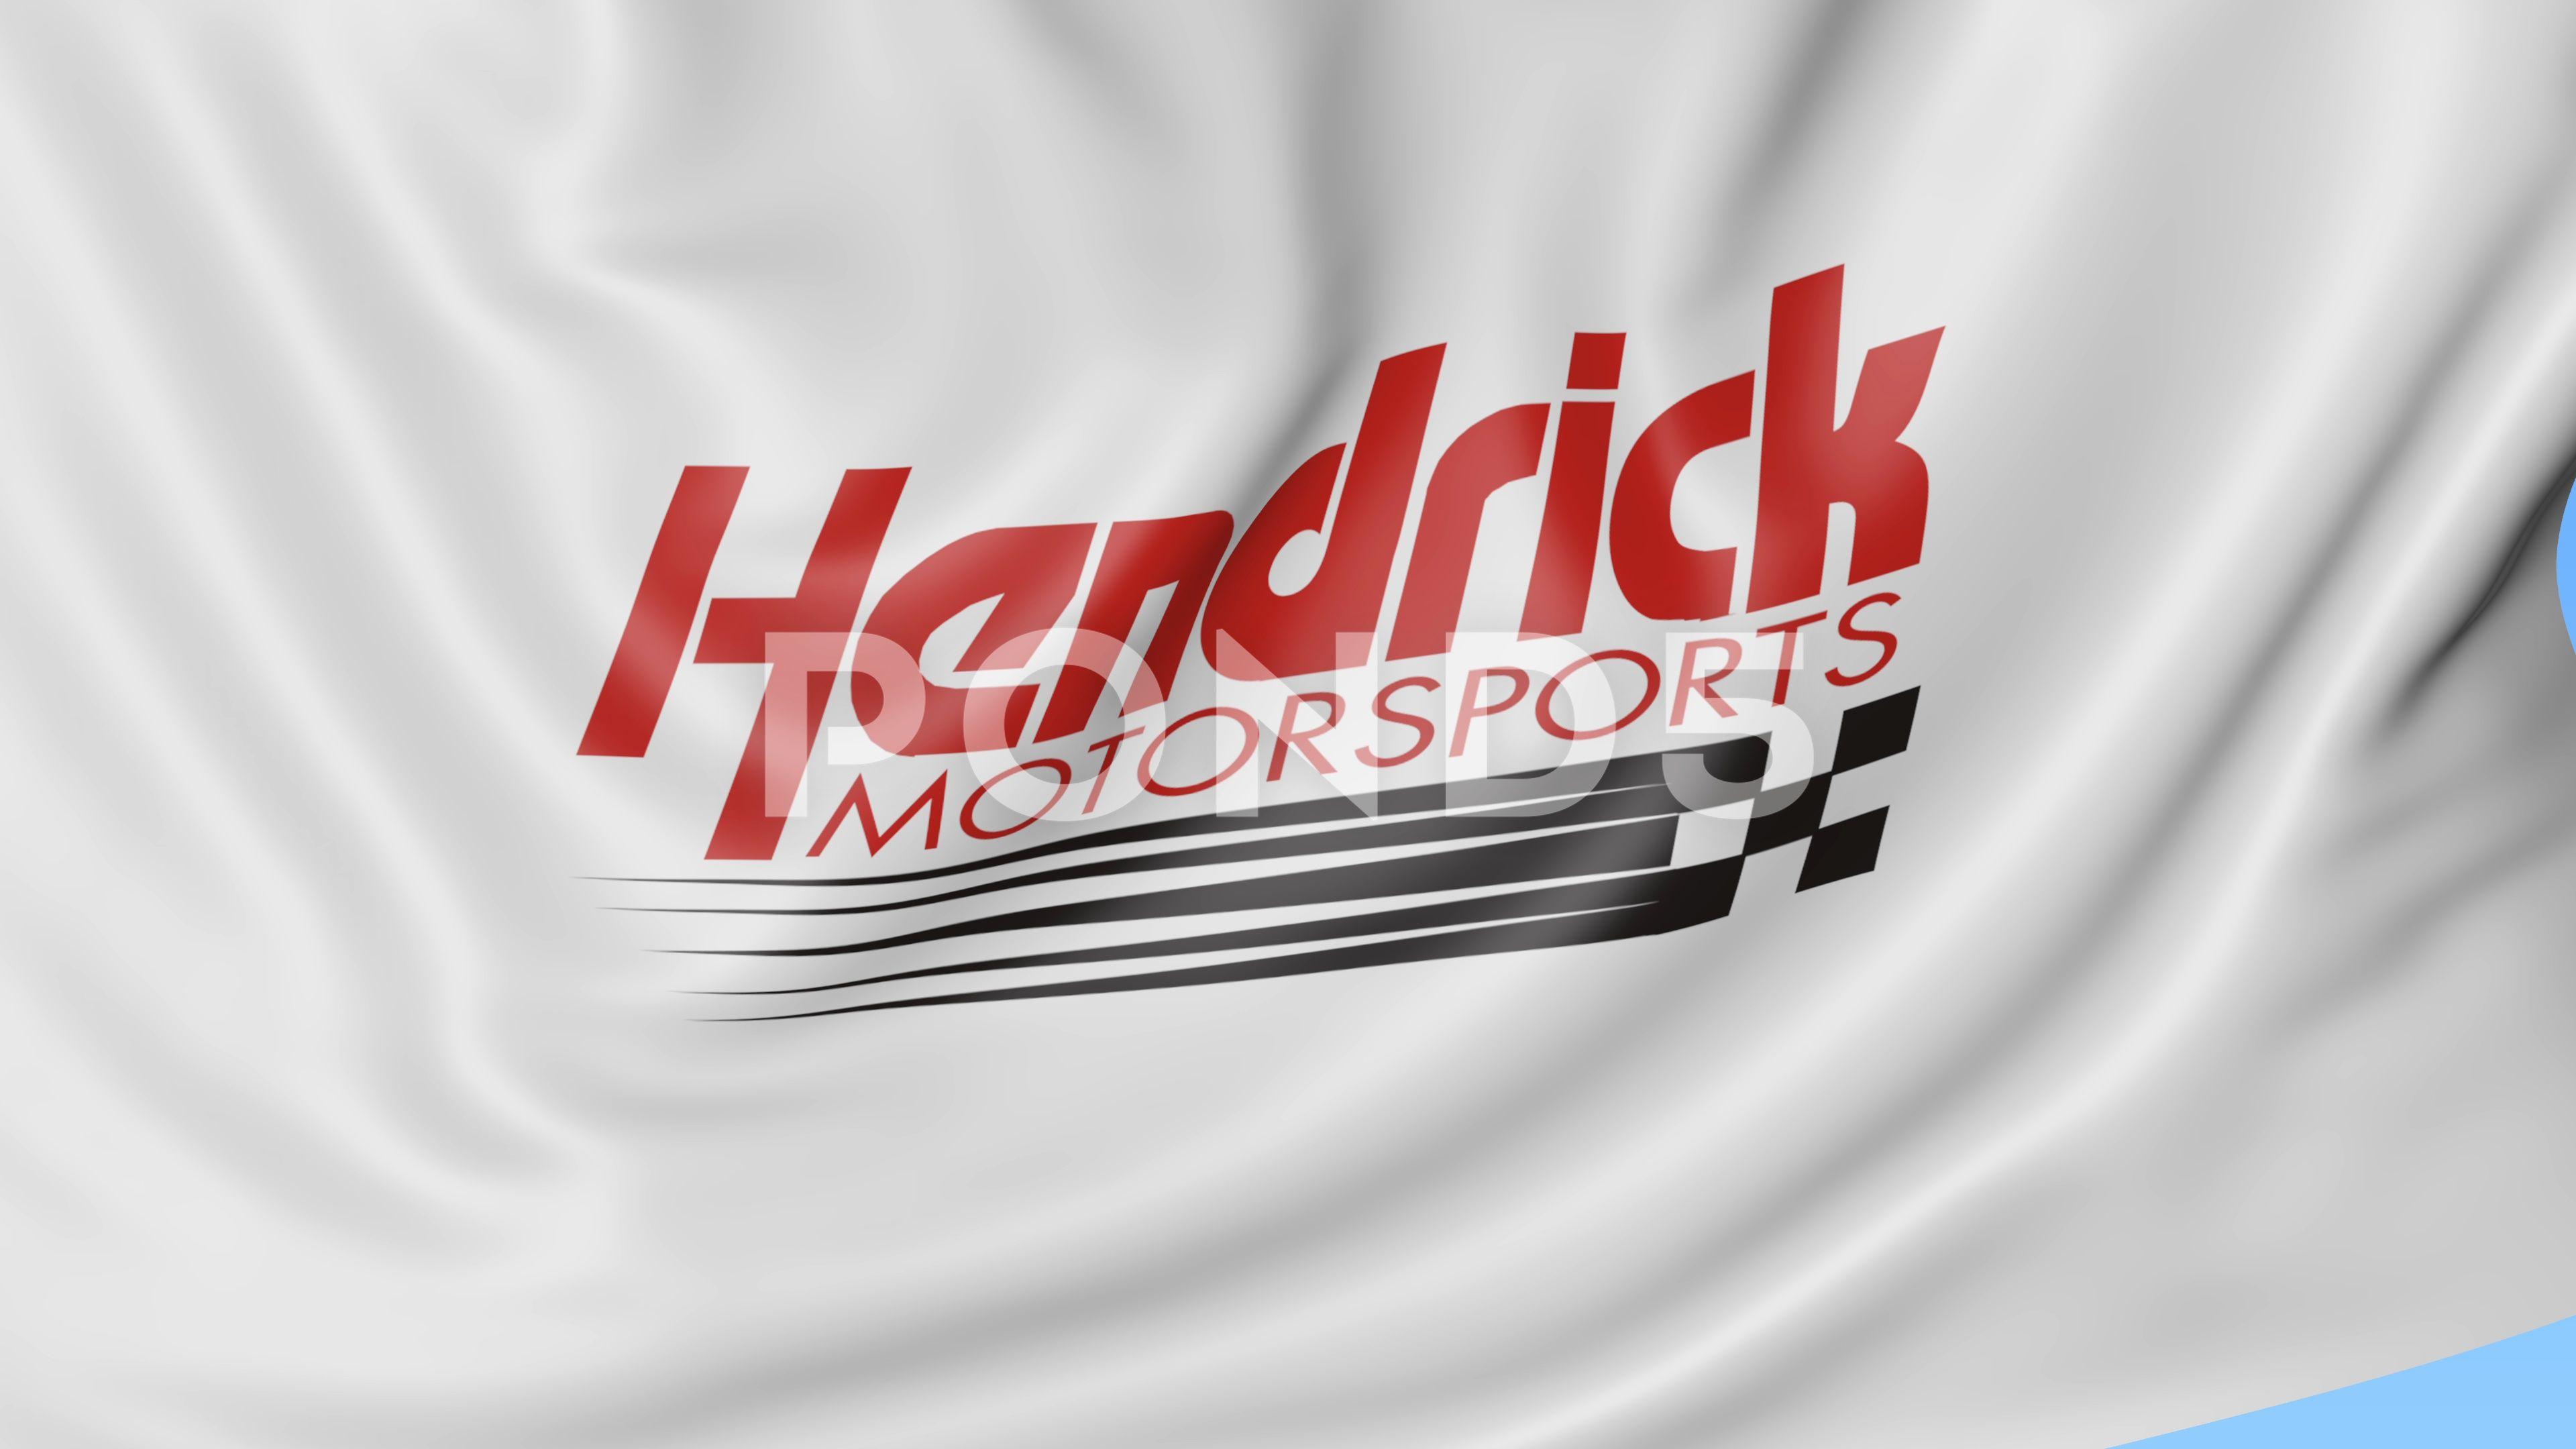 Hendrick Motorsports Logo - Waving flag with Hendrick Motorsports logo. Seamles loop 4K